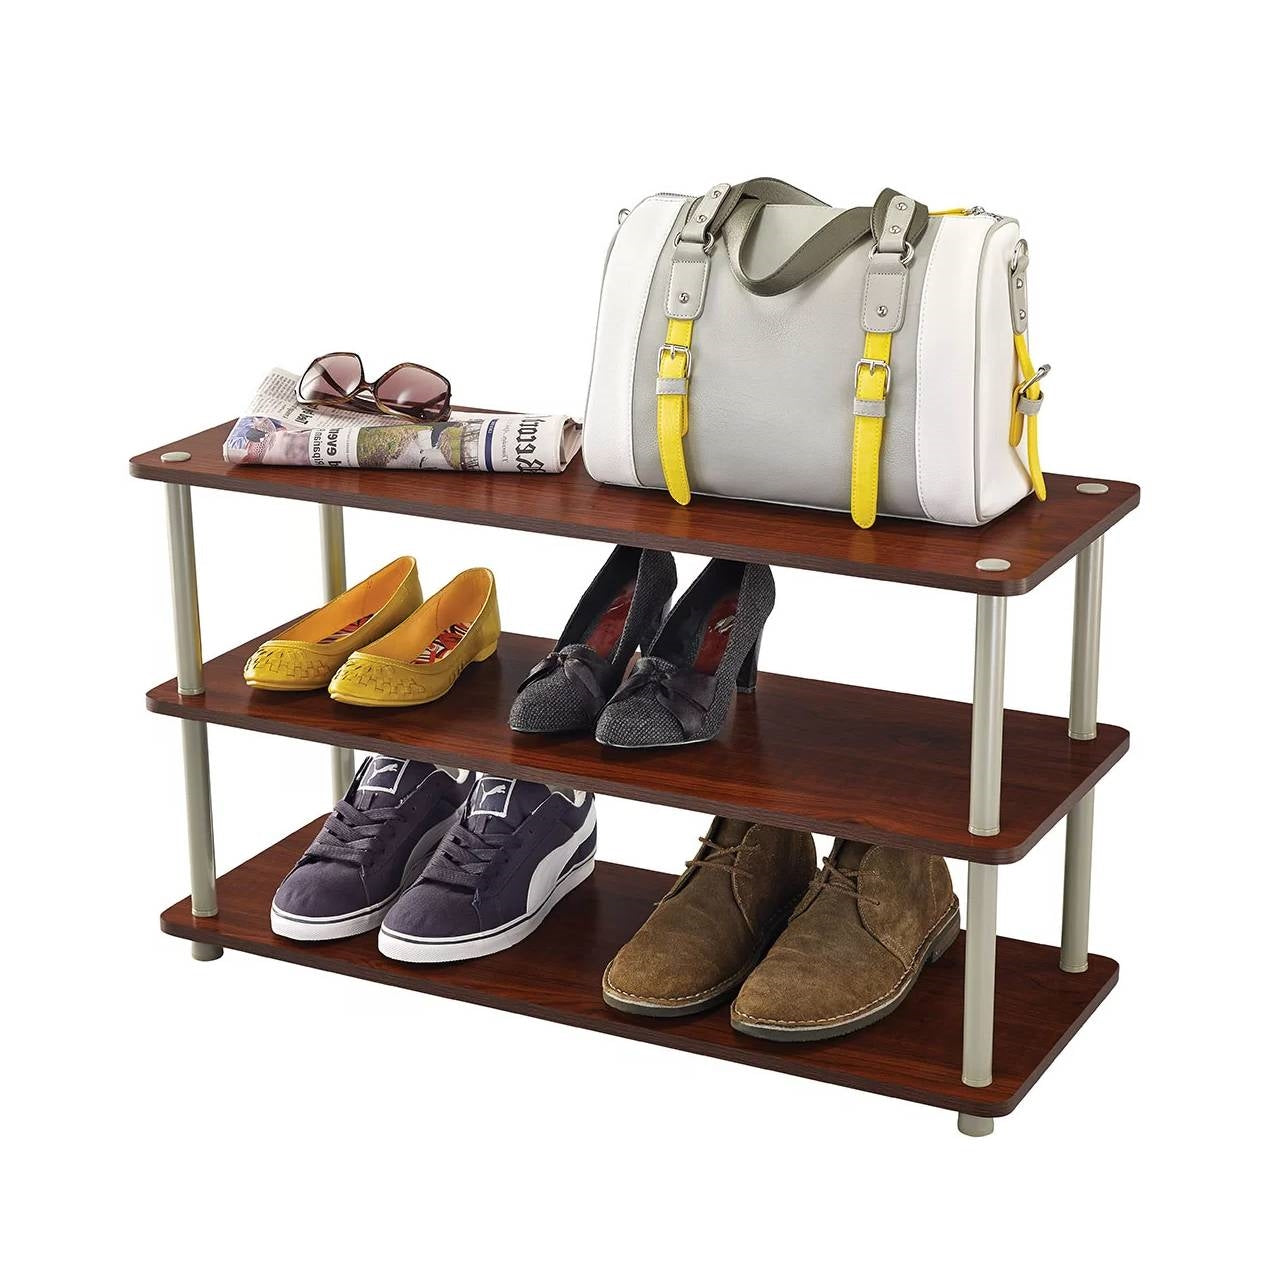 Dark Cherry 3-Shelf Modern Shoe Rack - Holds up to 12 Pair of Shoes